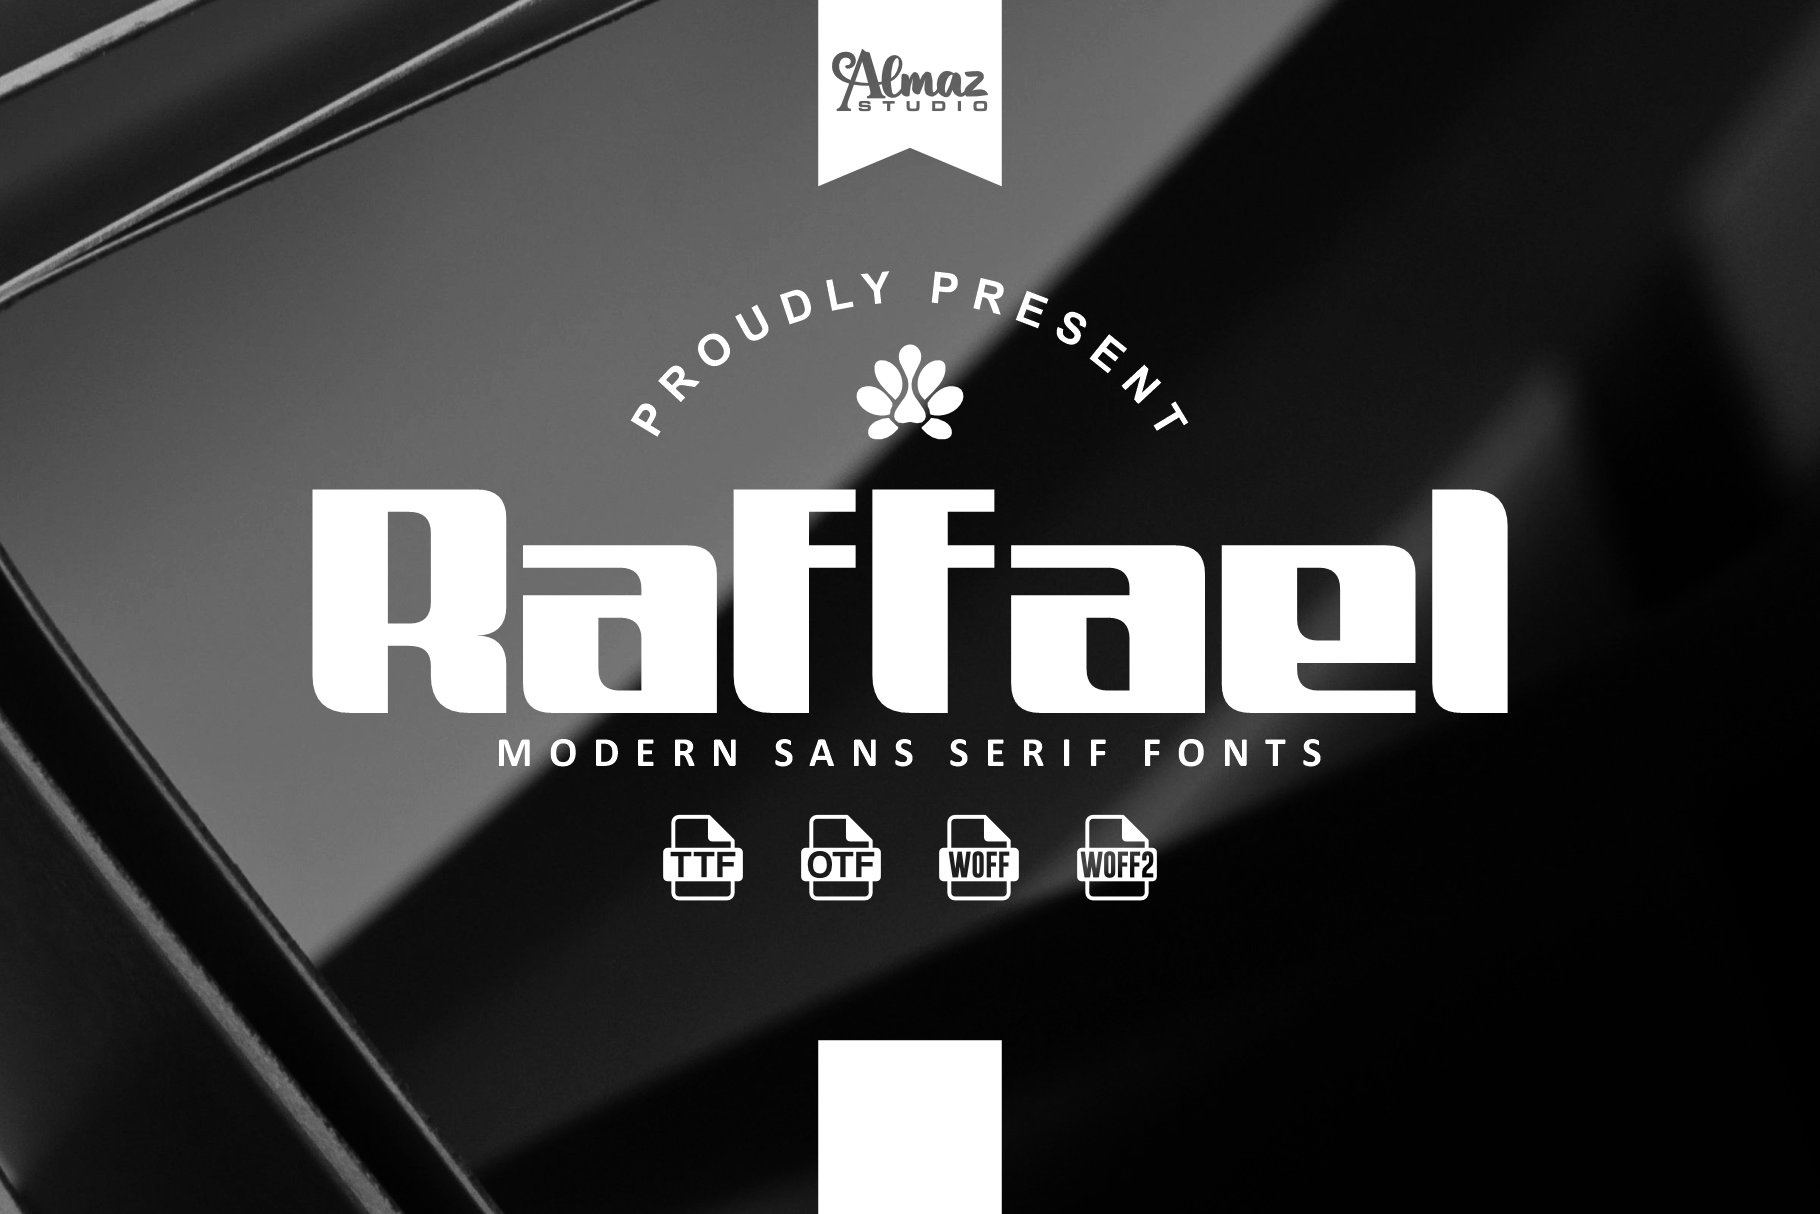 Raffael cover image.